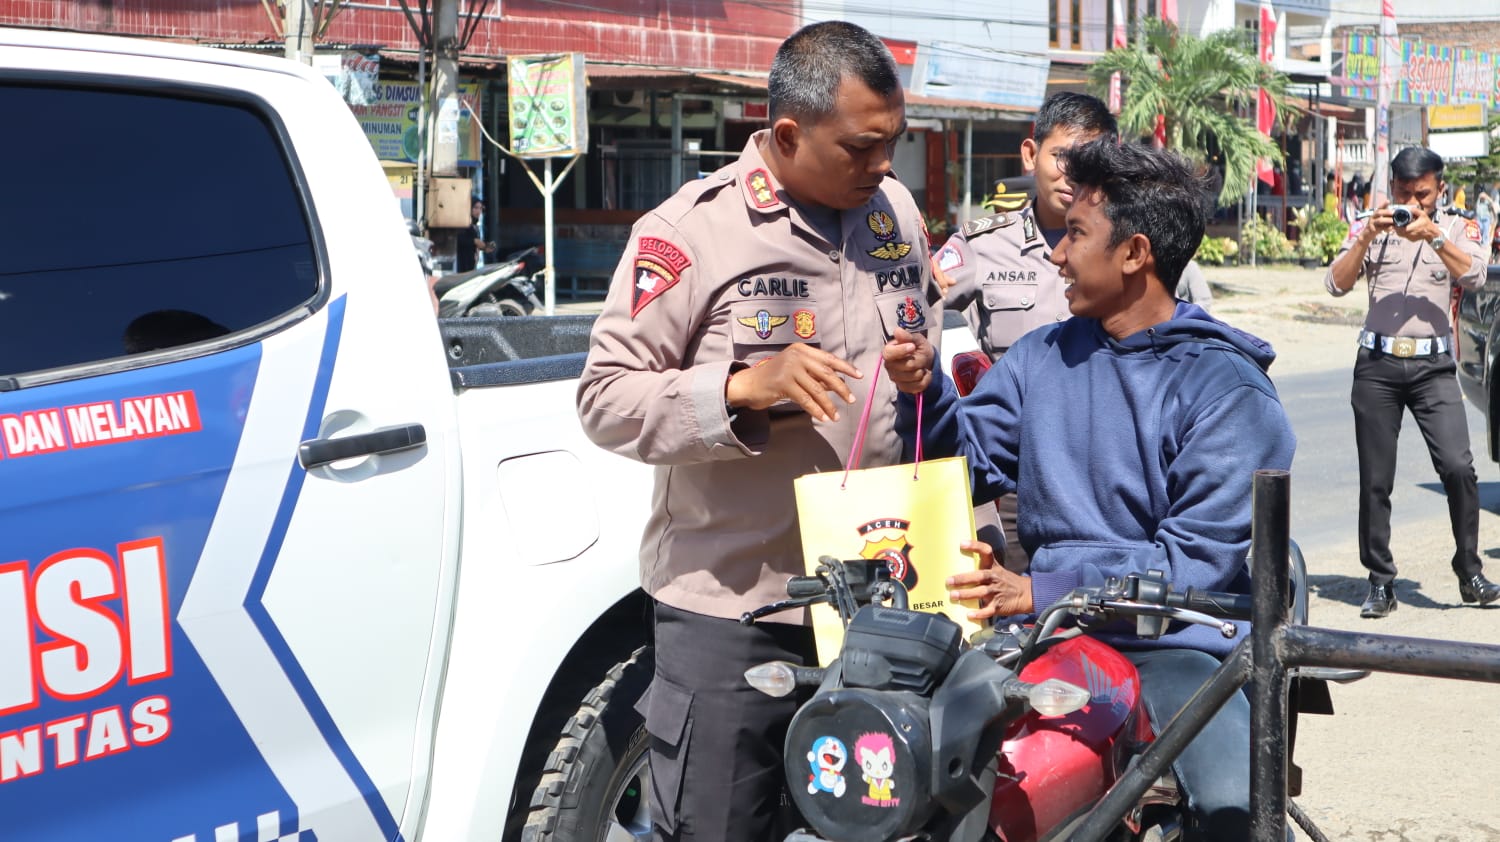 Jumat Berkah, Polres Aceh Besar Bagi Sembako Pada Supir dan Warga